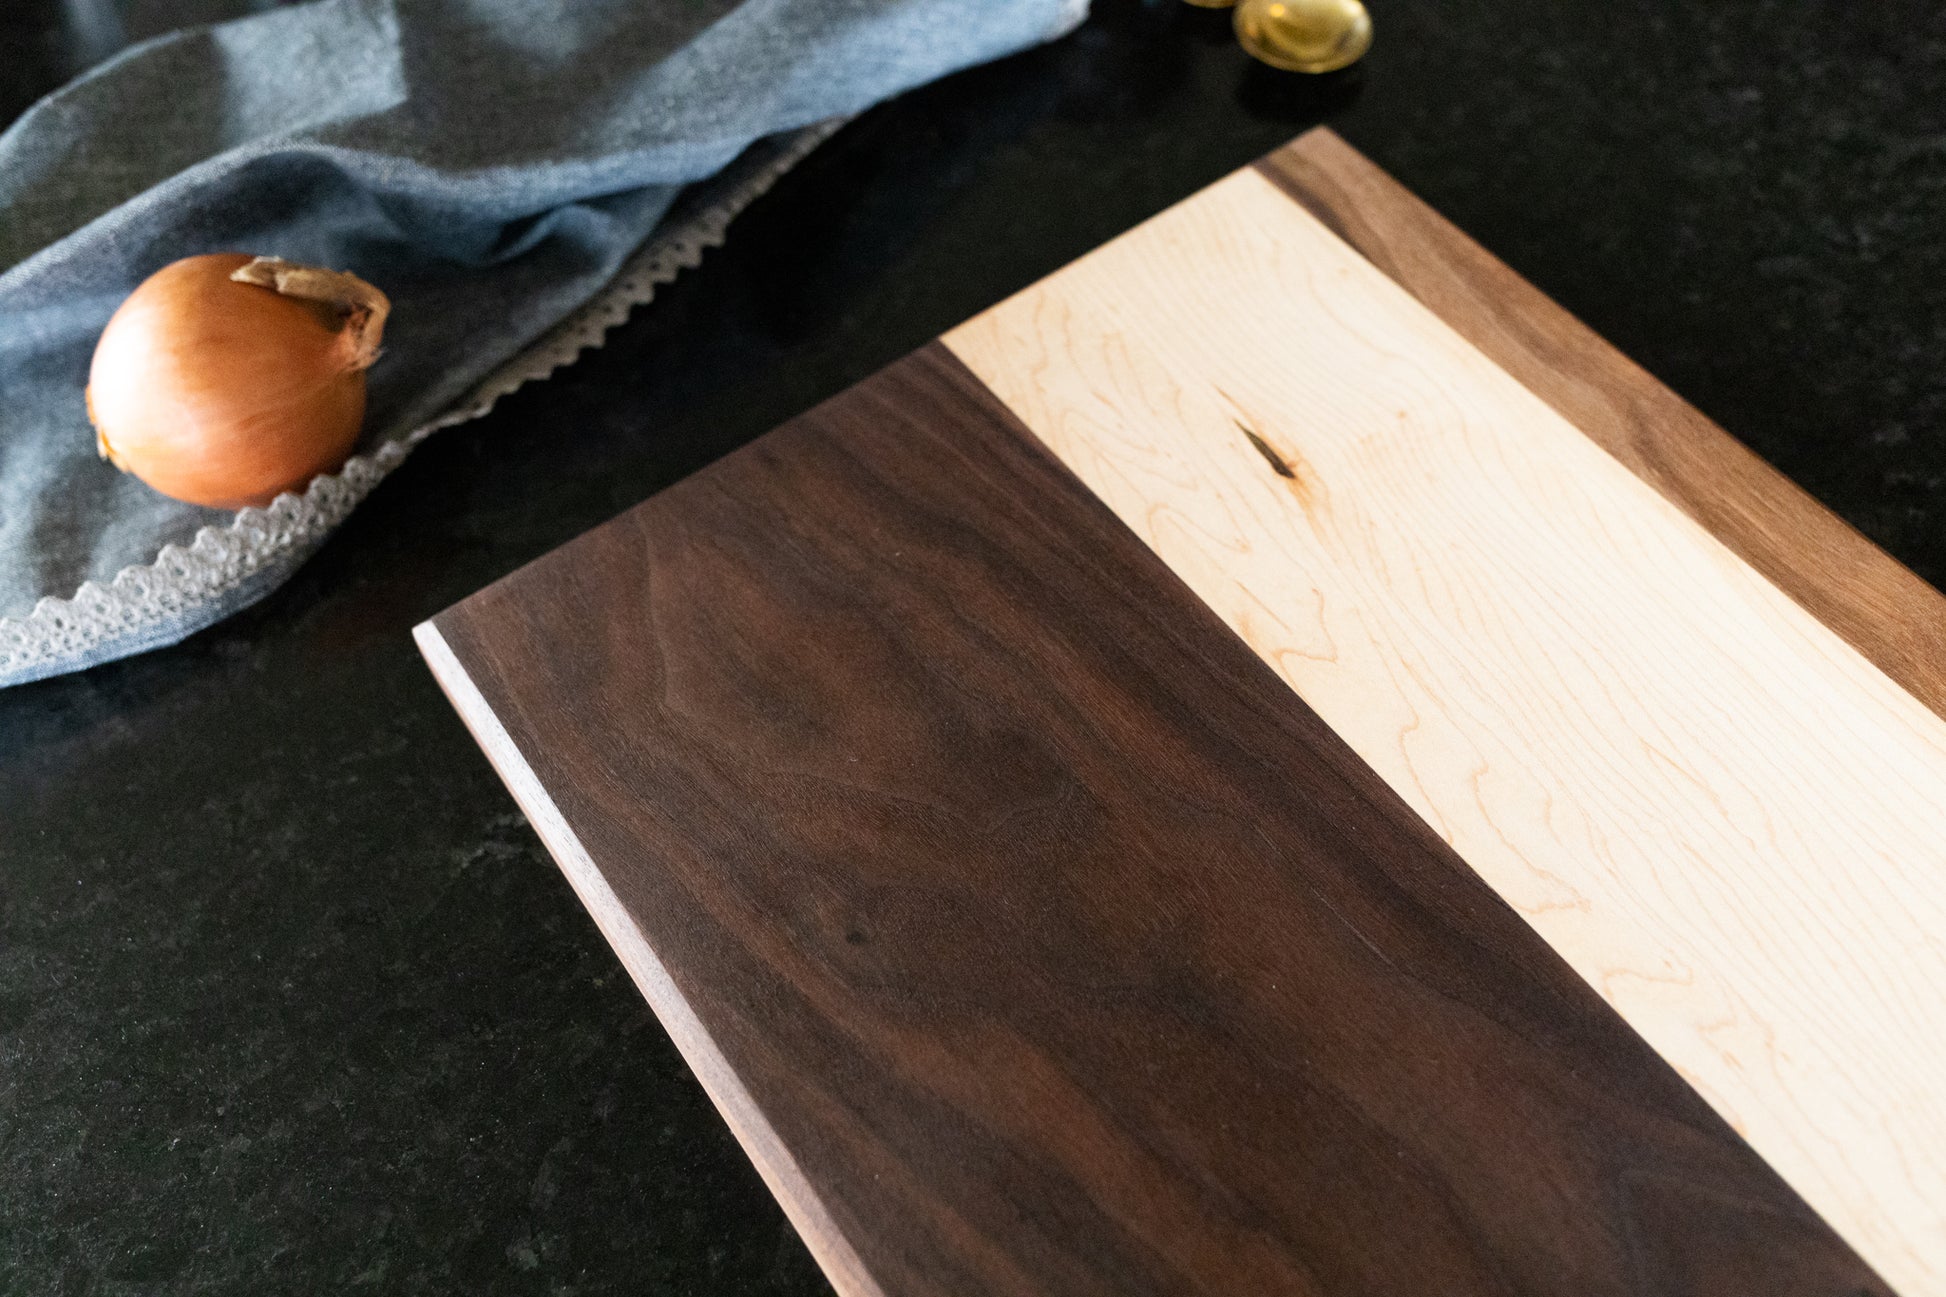 12x18 Maple Cutting Board